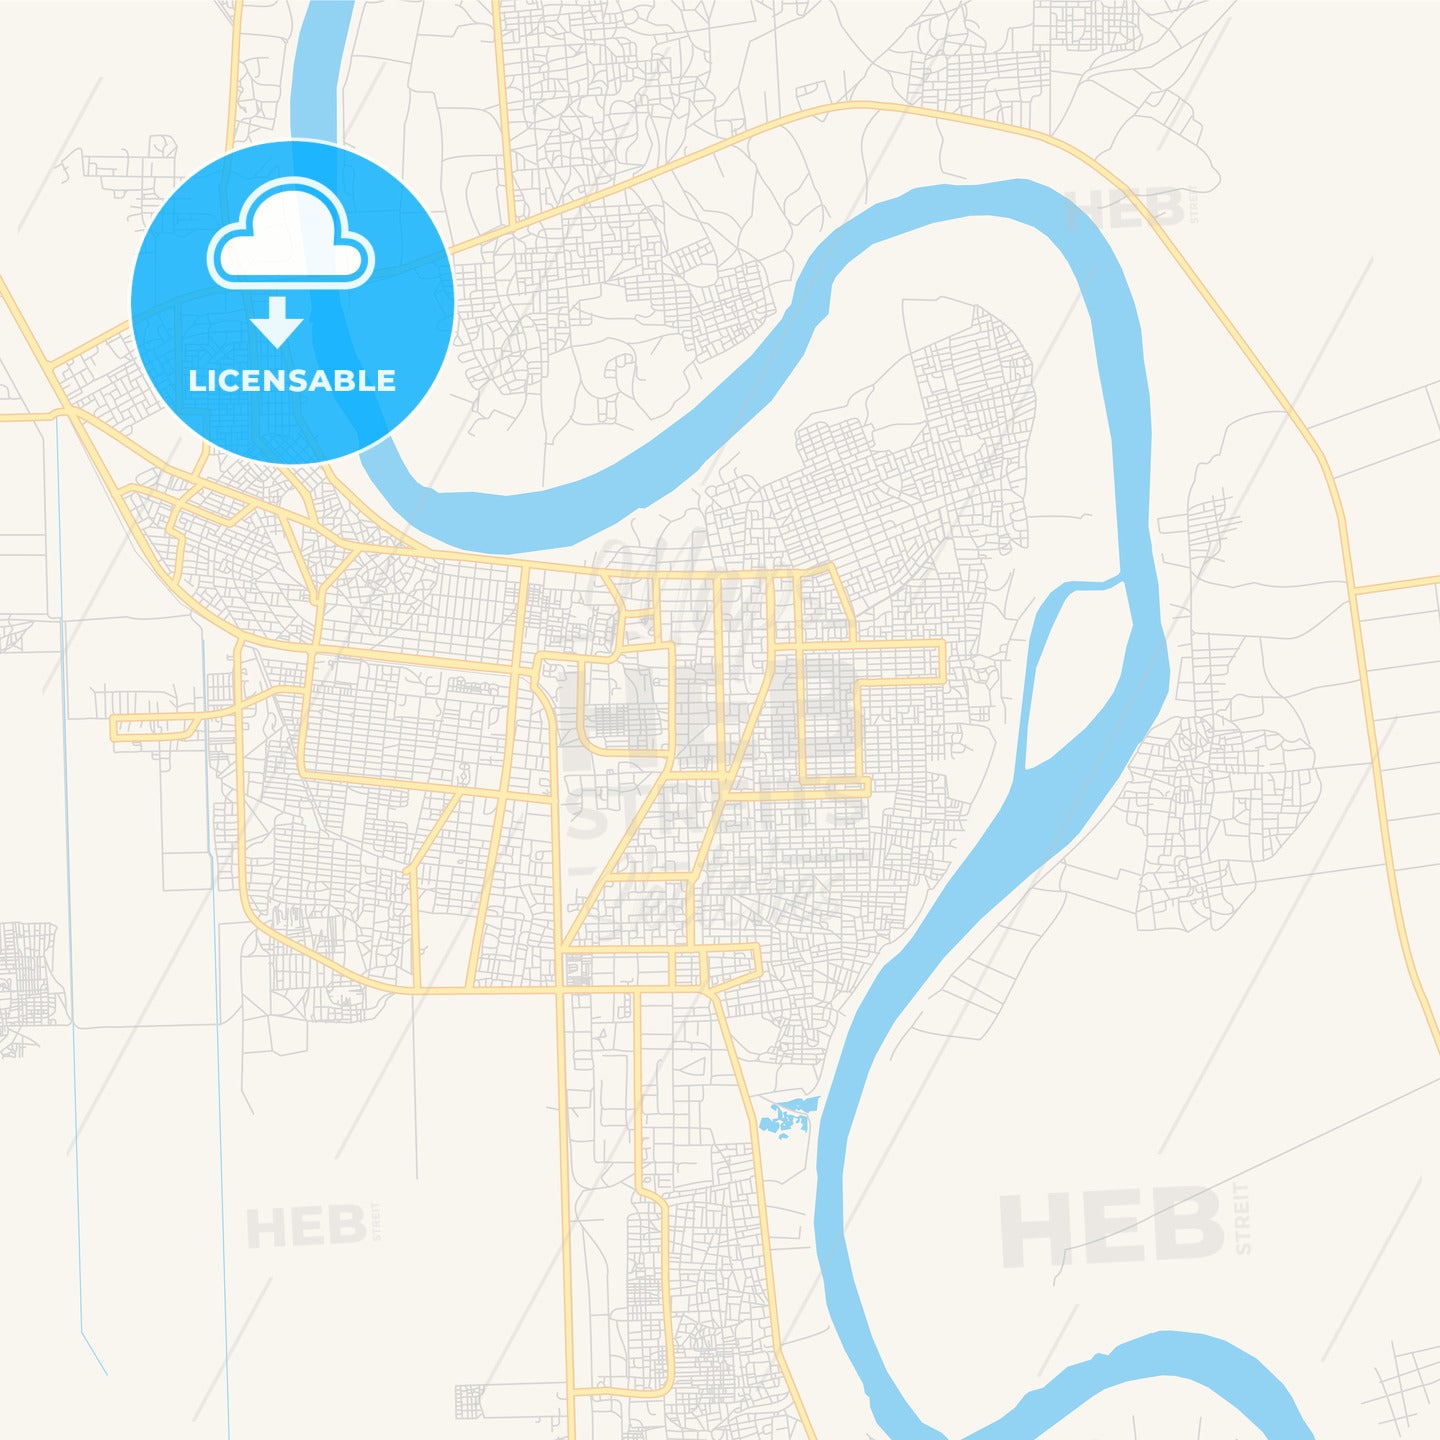 Printable street map of Wad Medani, Sudan